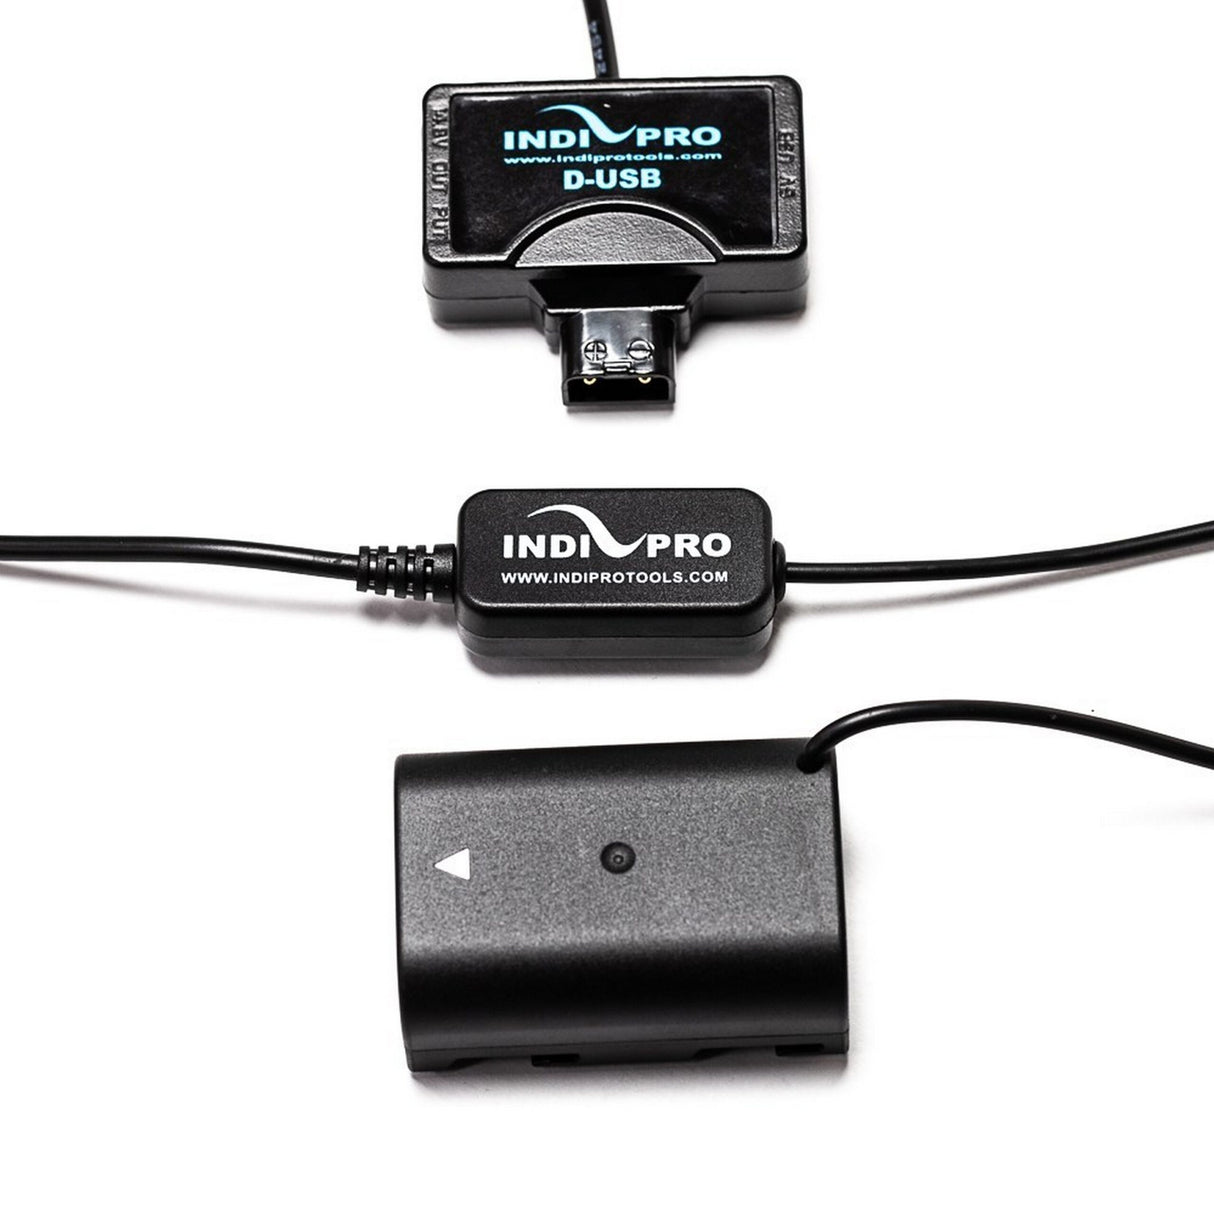 IndiPRO MINIP19 Tri-Tap to Panasonic DMW-BLW19 Type Dummy Battery, 24-Inch Regulated